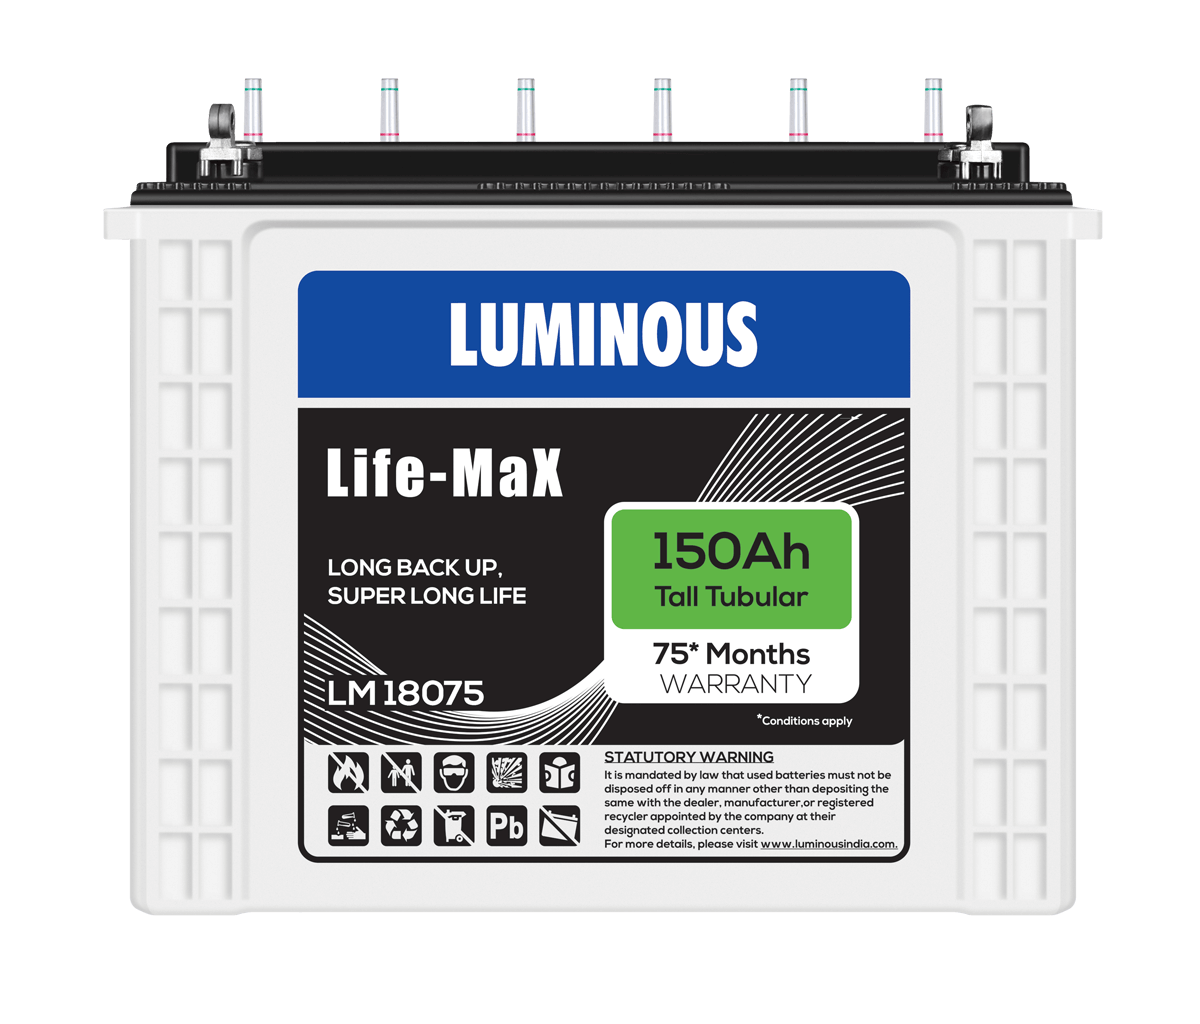 150Ah LIFE MAX Tall Tubular Battery (LM18075) in chennai, Luminous 150Ah LIFEMAX Tubular Battery (LM18075) price in chennai